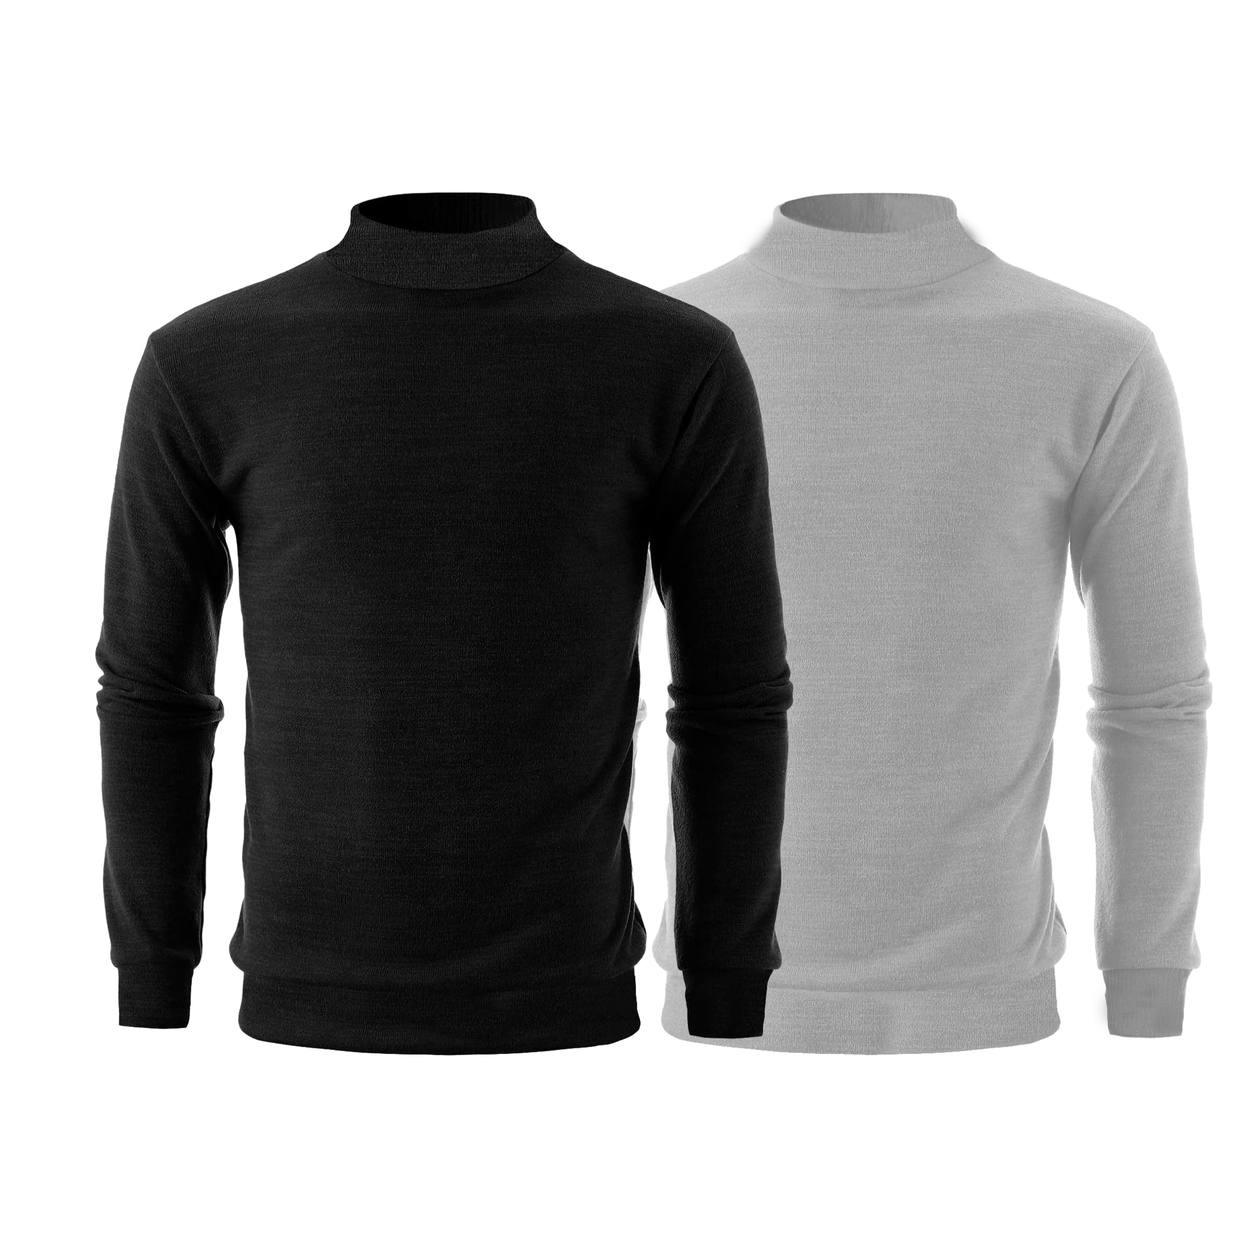 2-Pack: Men's Winter Warm Cozy Knit Slim Fit Mock Neck Sweater - White & White, Medium